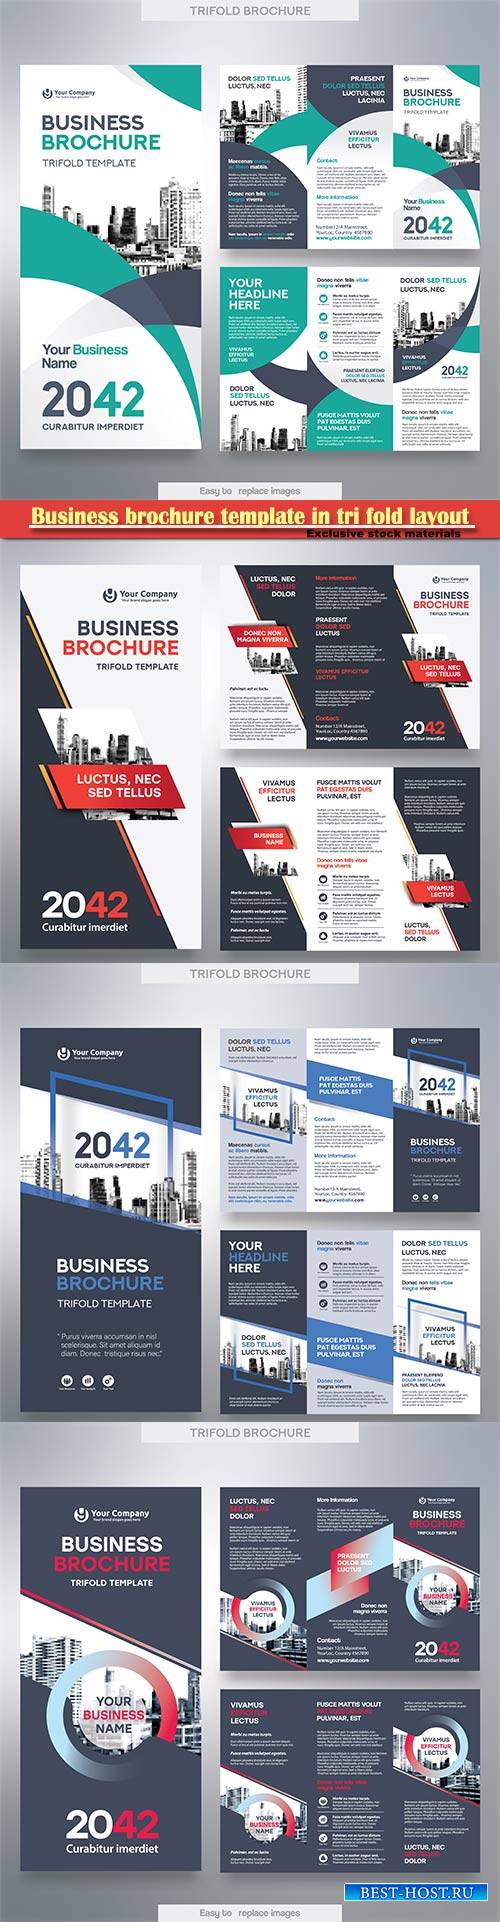 Business brochure template in tri fold layout, corporate design vector illu ...